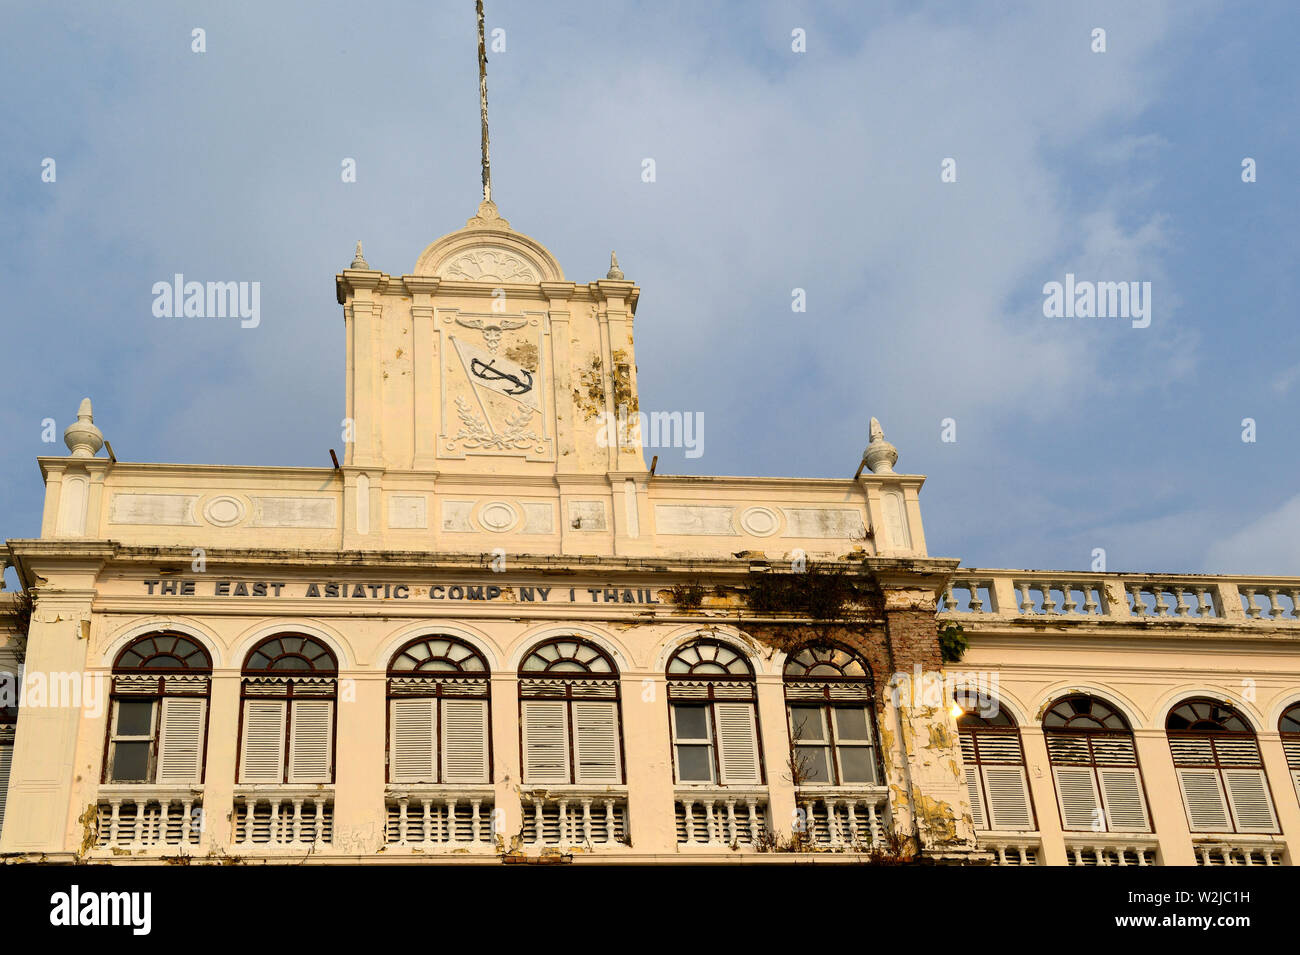 Bangkok, Thailand - Februar 02, 2019: Historische der East Asiatic Company Bürogebäude am Ufer des Mae Nam Chao Phraya in der soi Charoen krung 40 Stockfoto